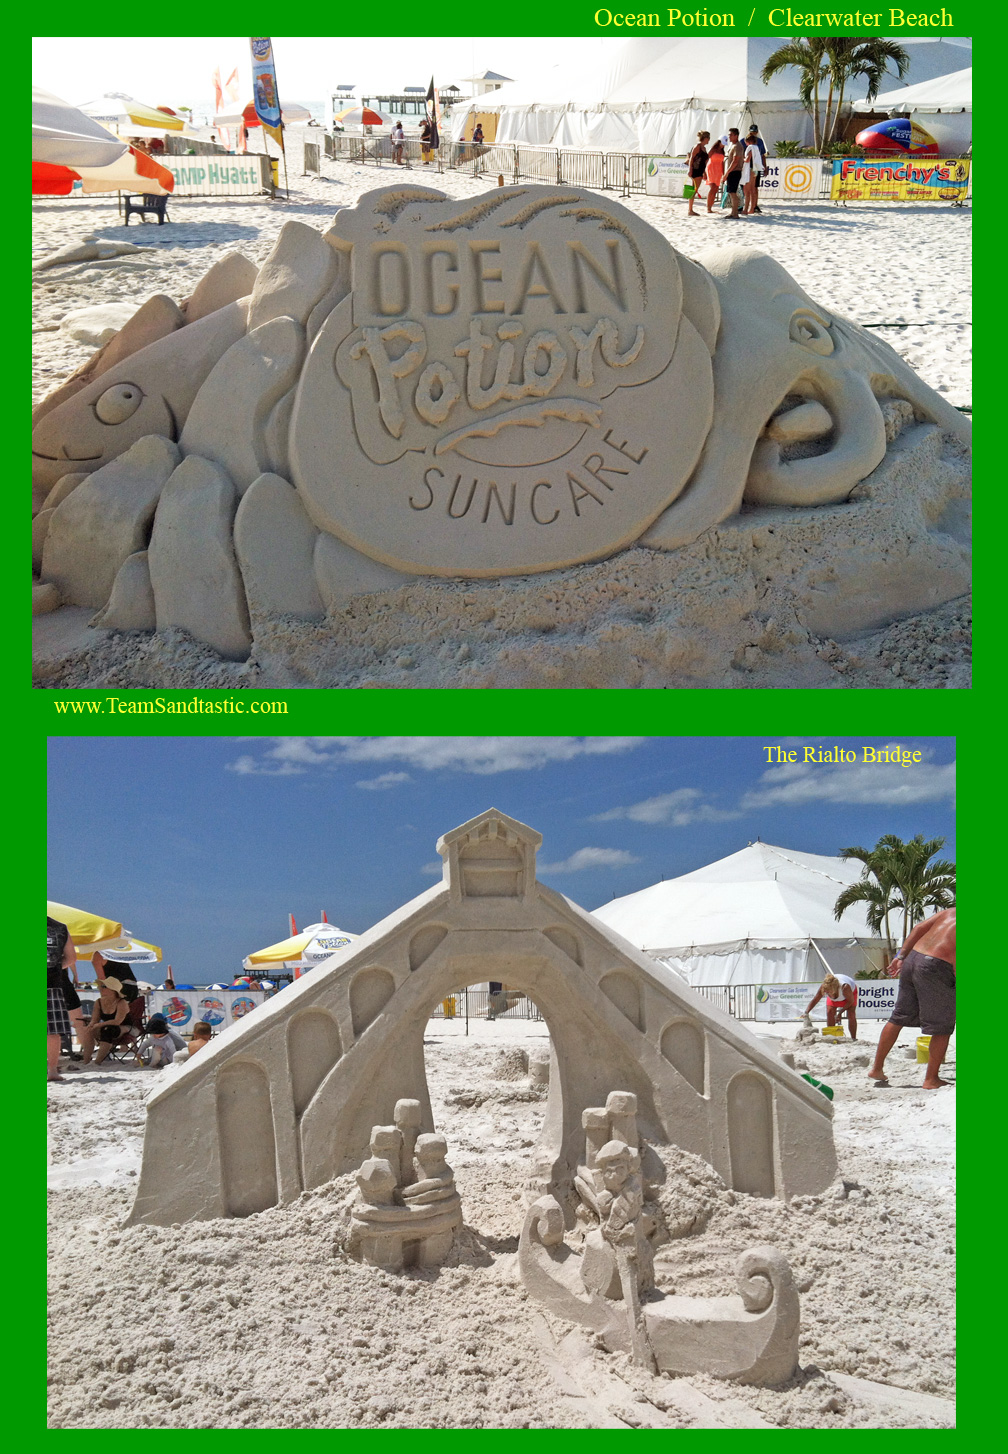 Ocean Potion Sand Sculptures